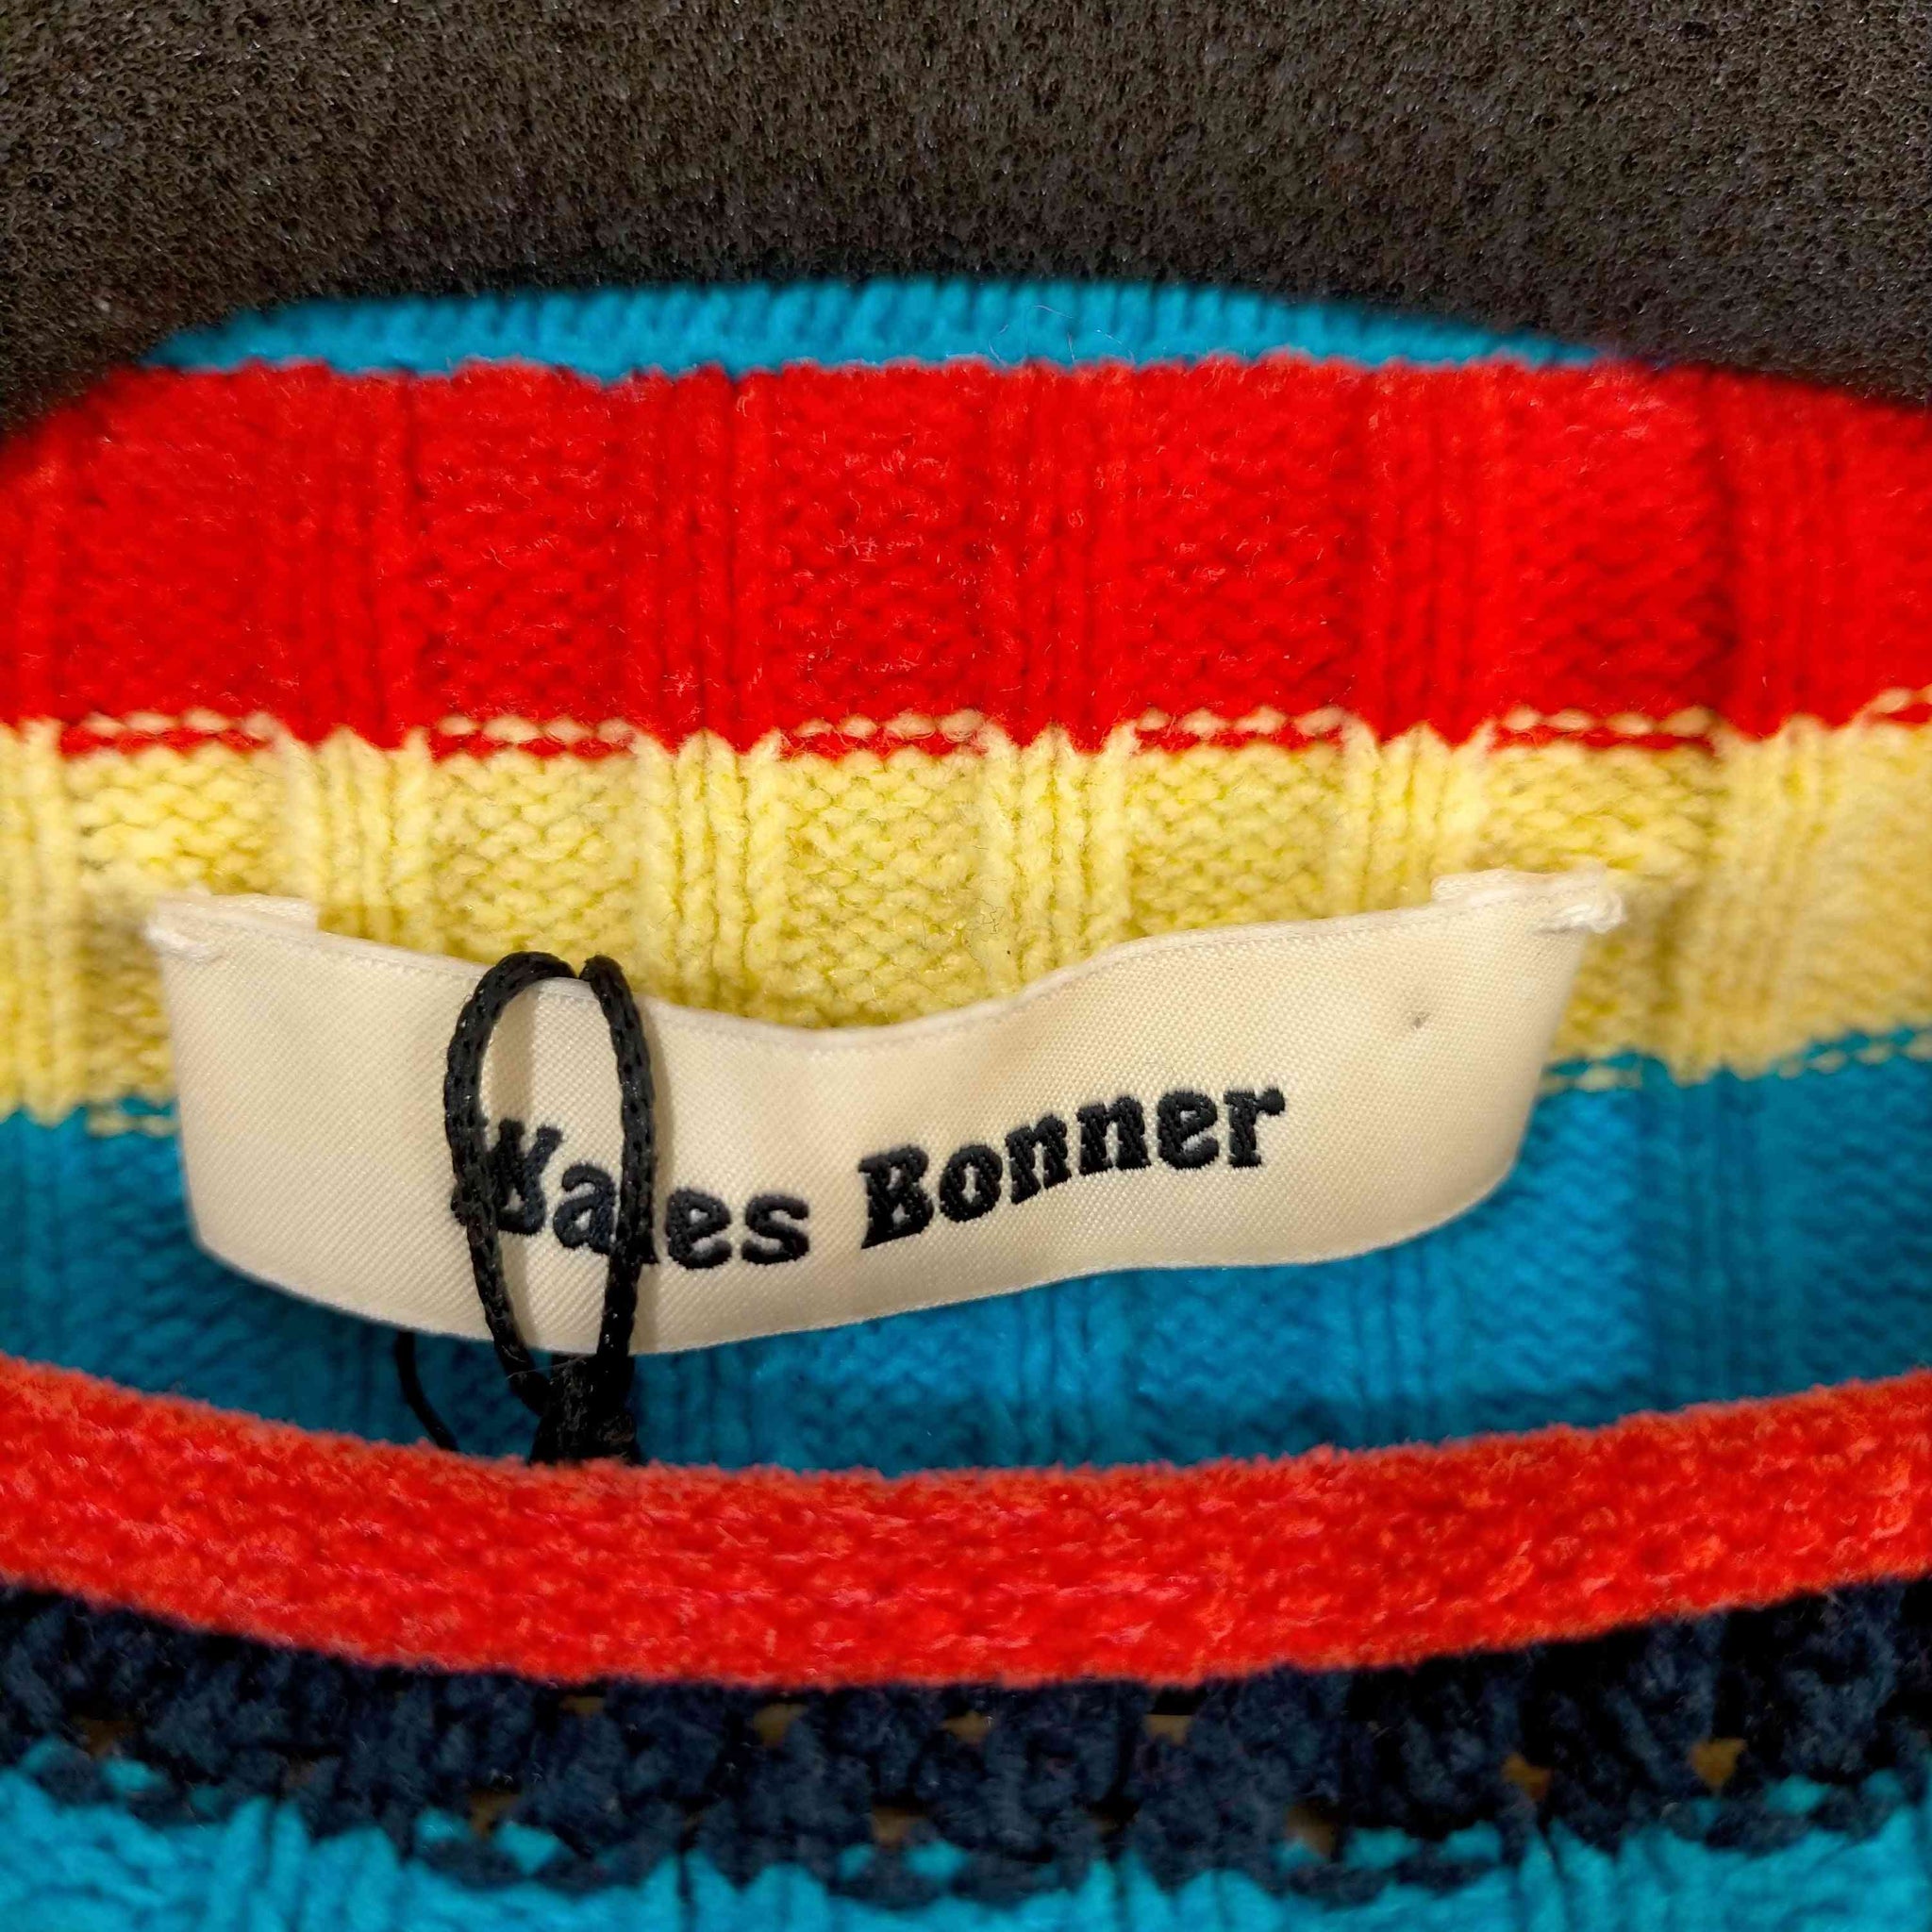 WALES BONNER(ウェールズボナー)22ss Choir Sweater ボーダーニット